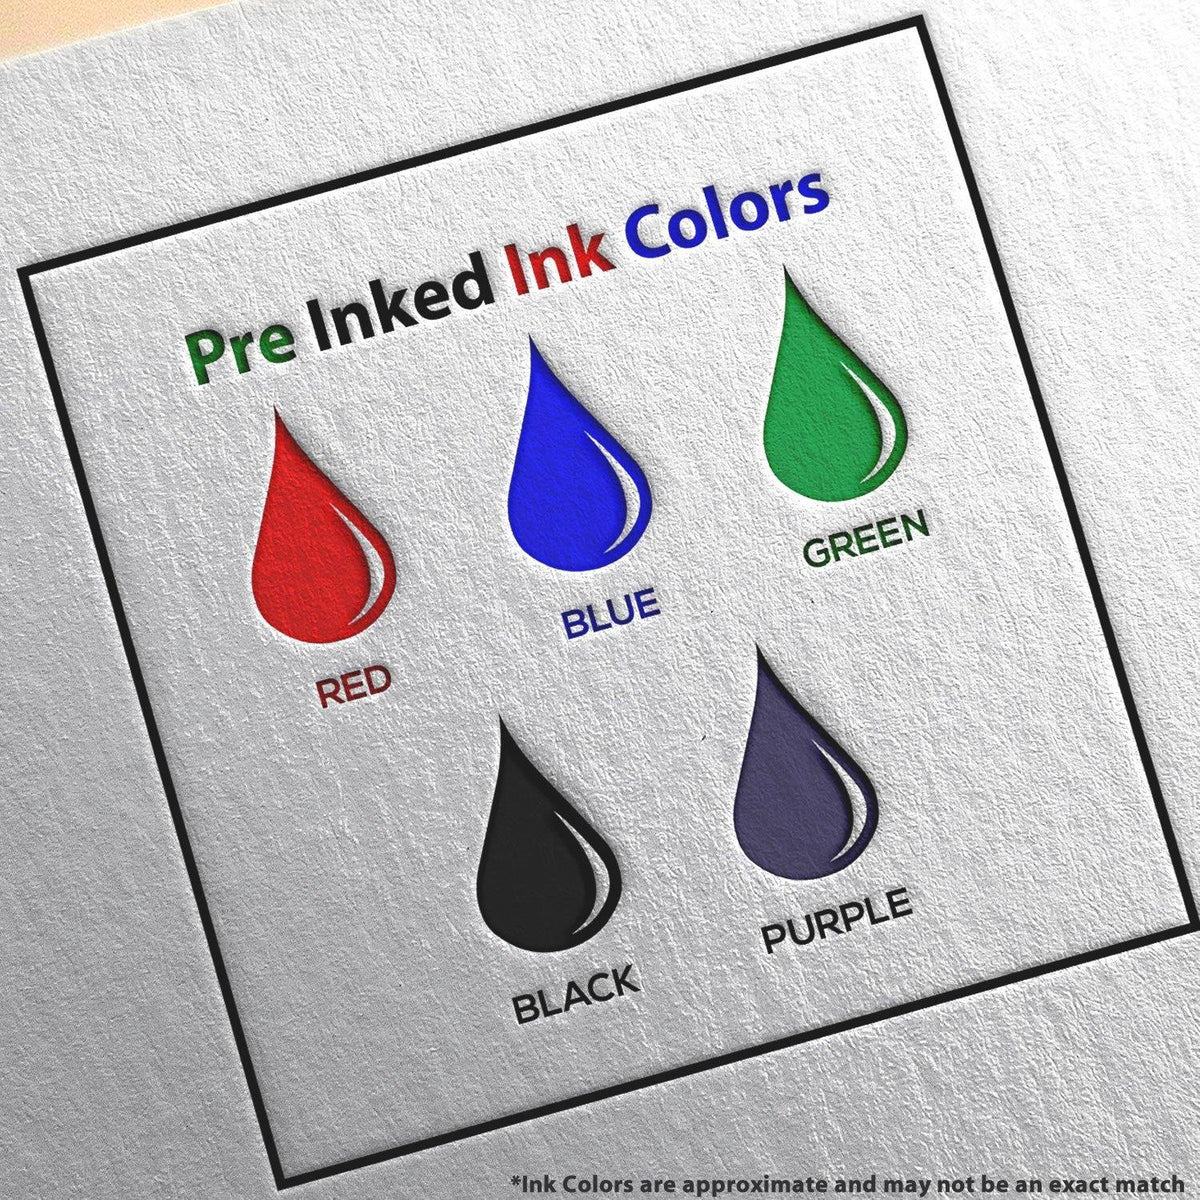 Slim Pre Inked Deposition Exhibit Stamp Ink Color Options